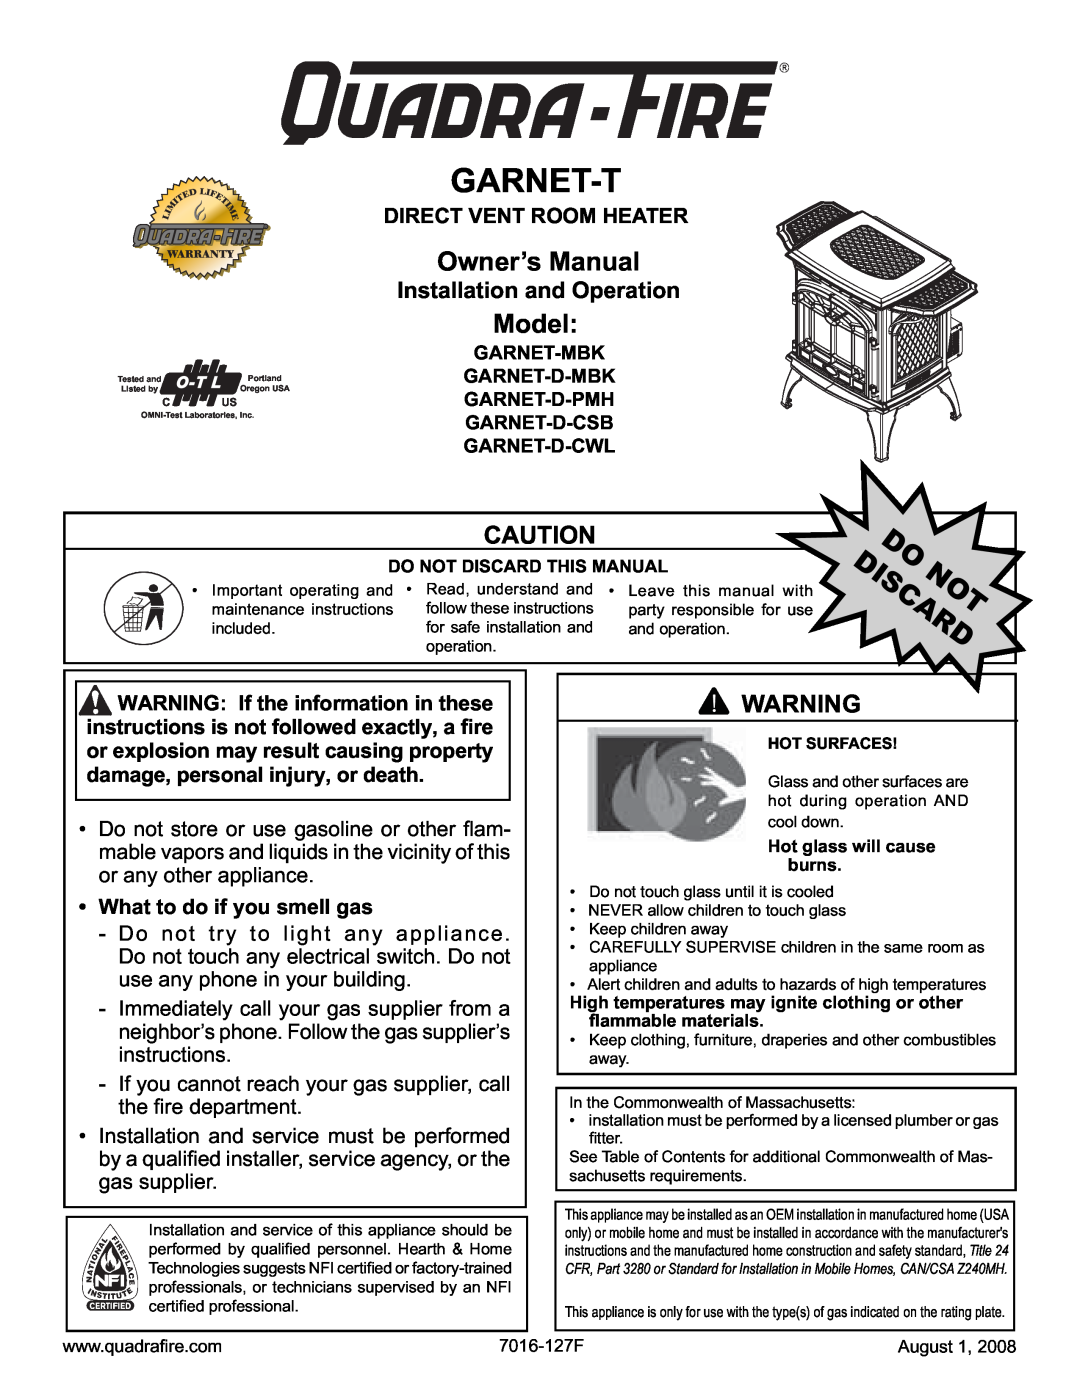 Quadra-Fire GARNET-D-PMH, GARNET-MBK owner manual Garnet-T, Model, Installation and Operation, Direct Vent Room Heater 